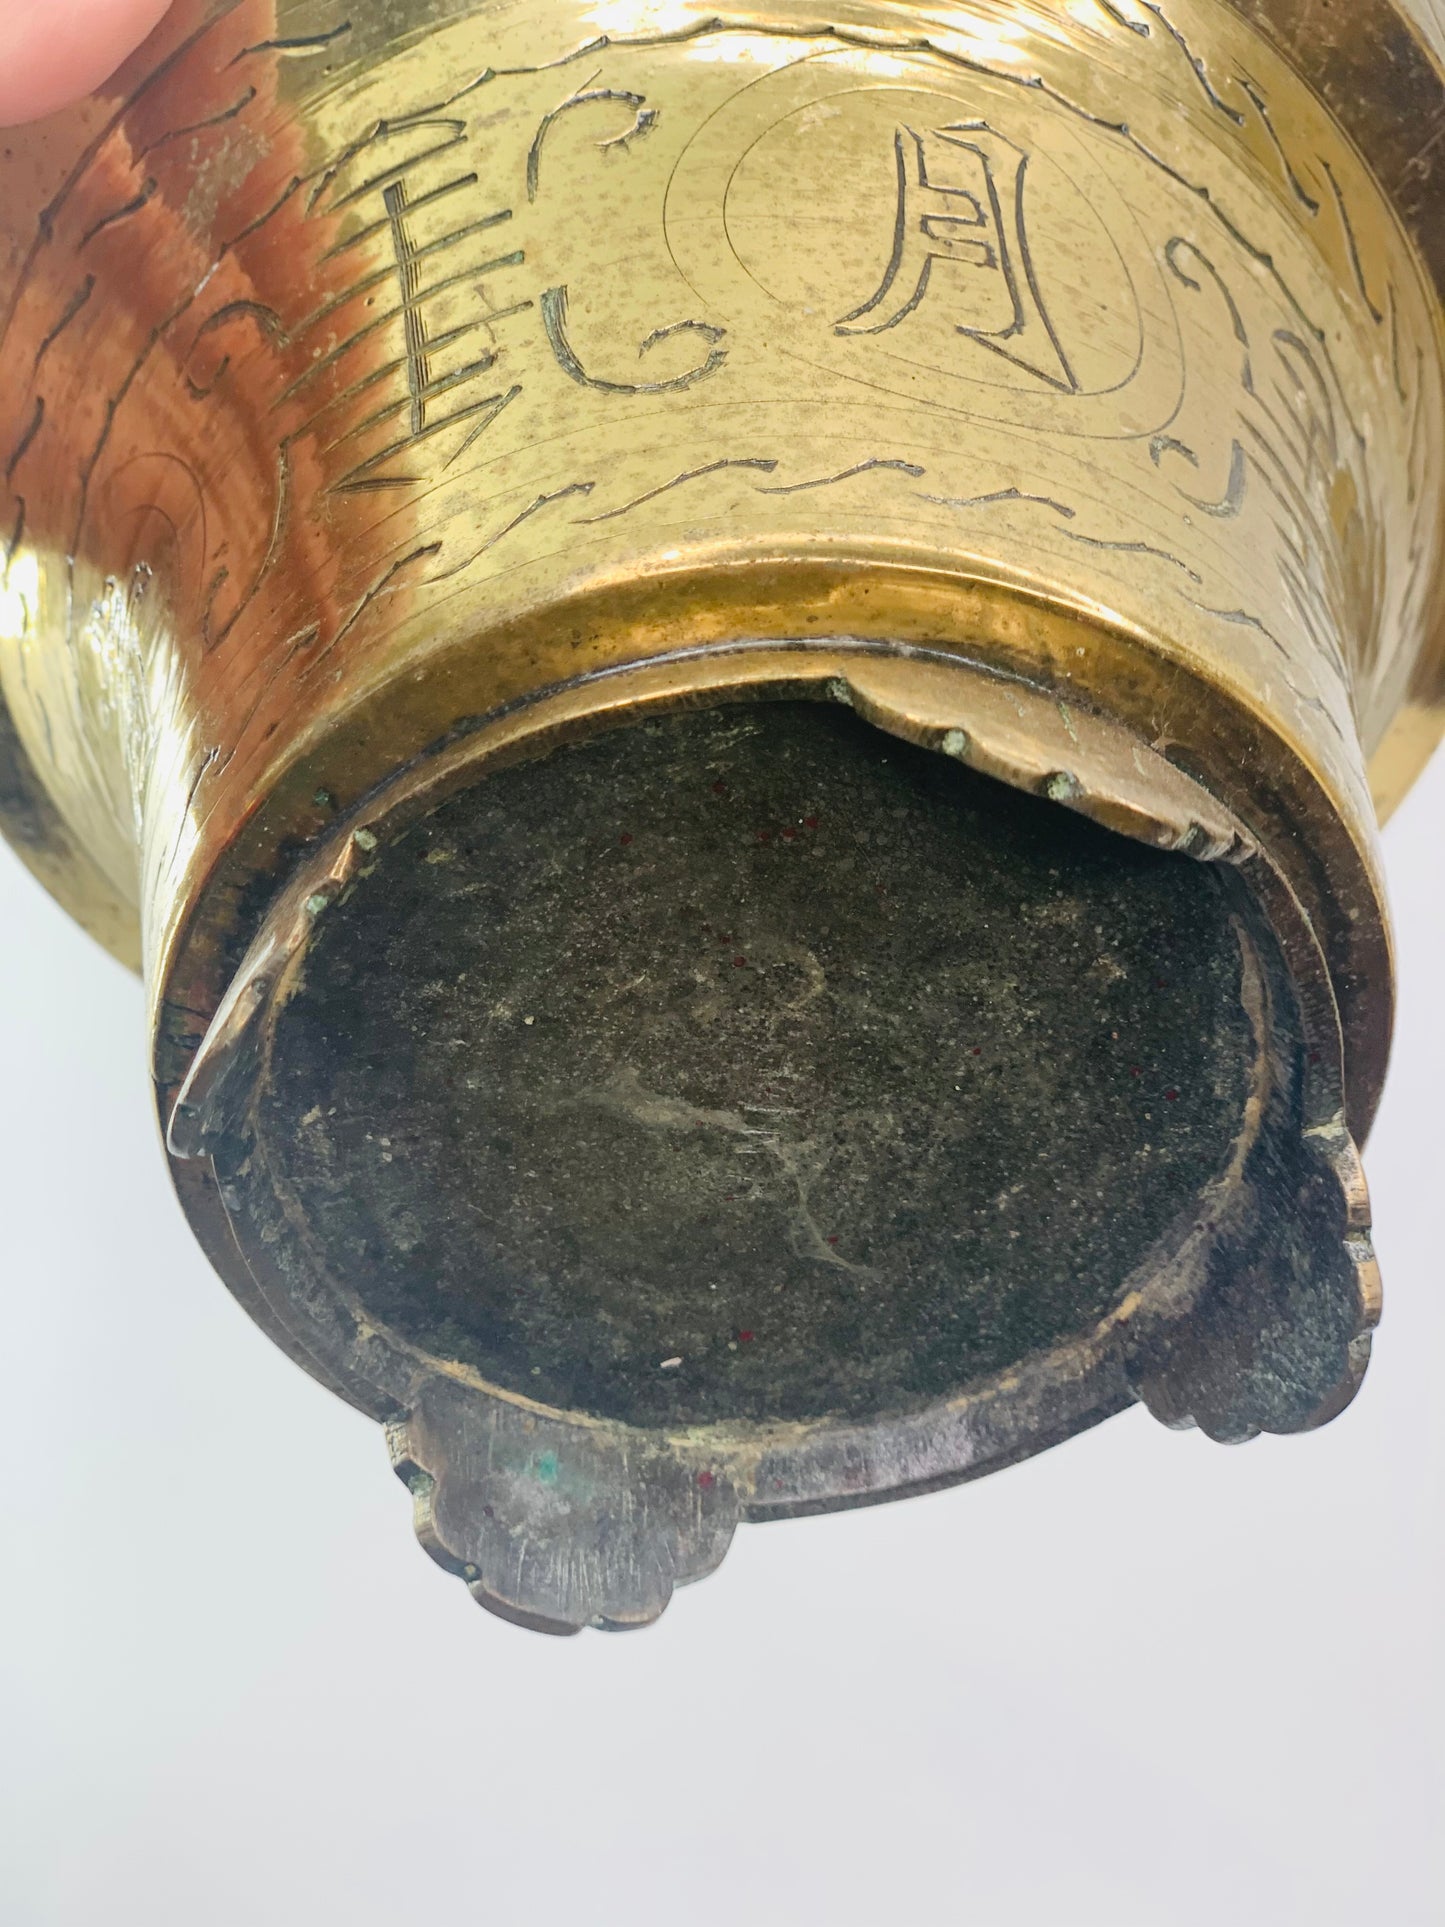 Antique Chinese brass incense burner